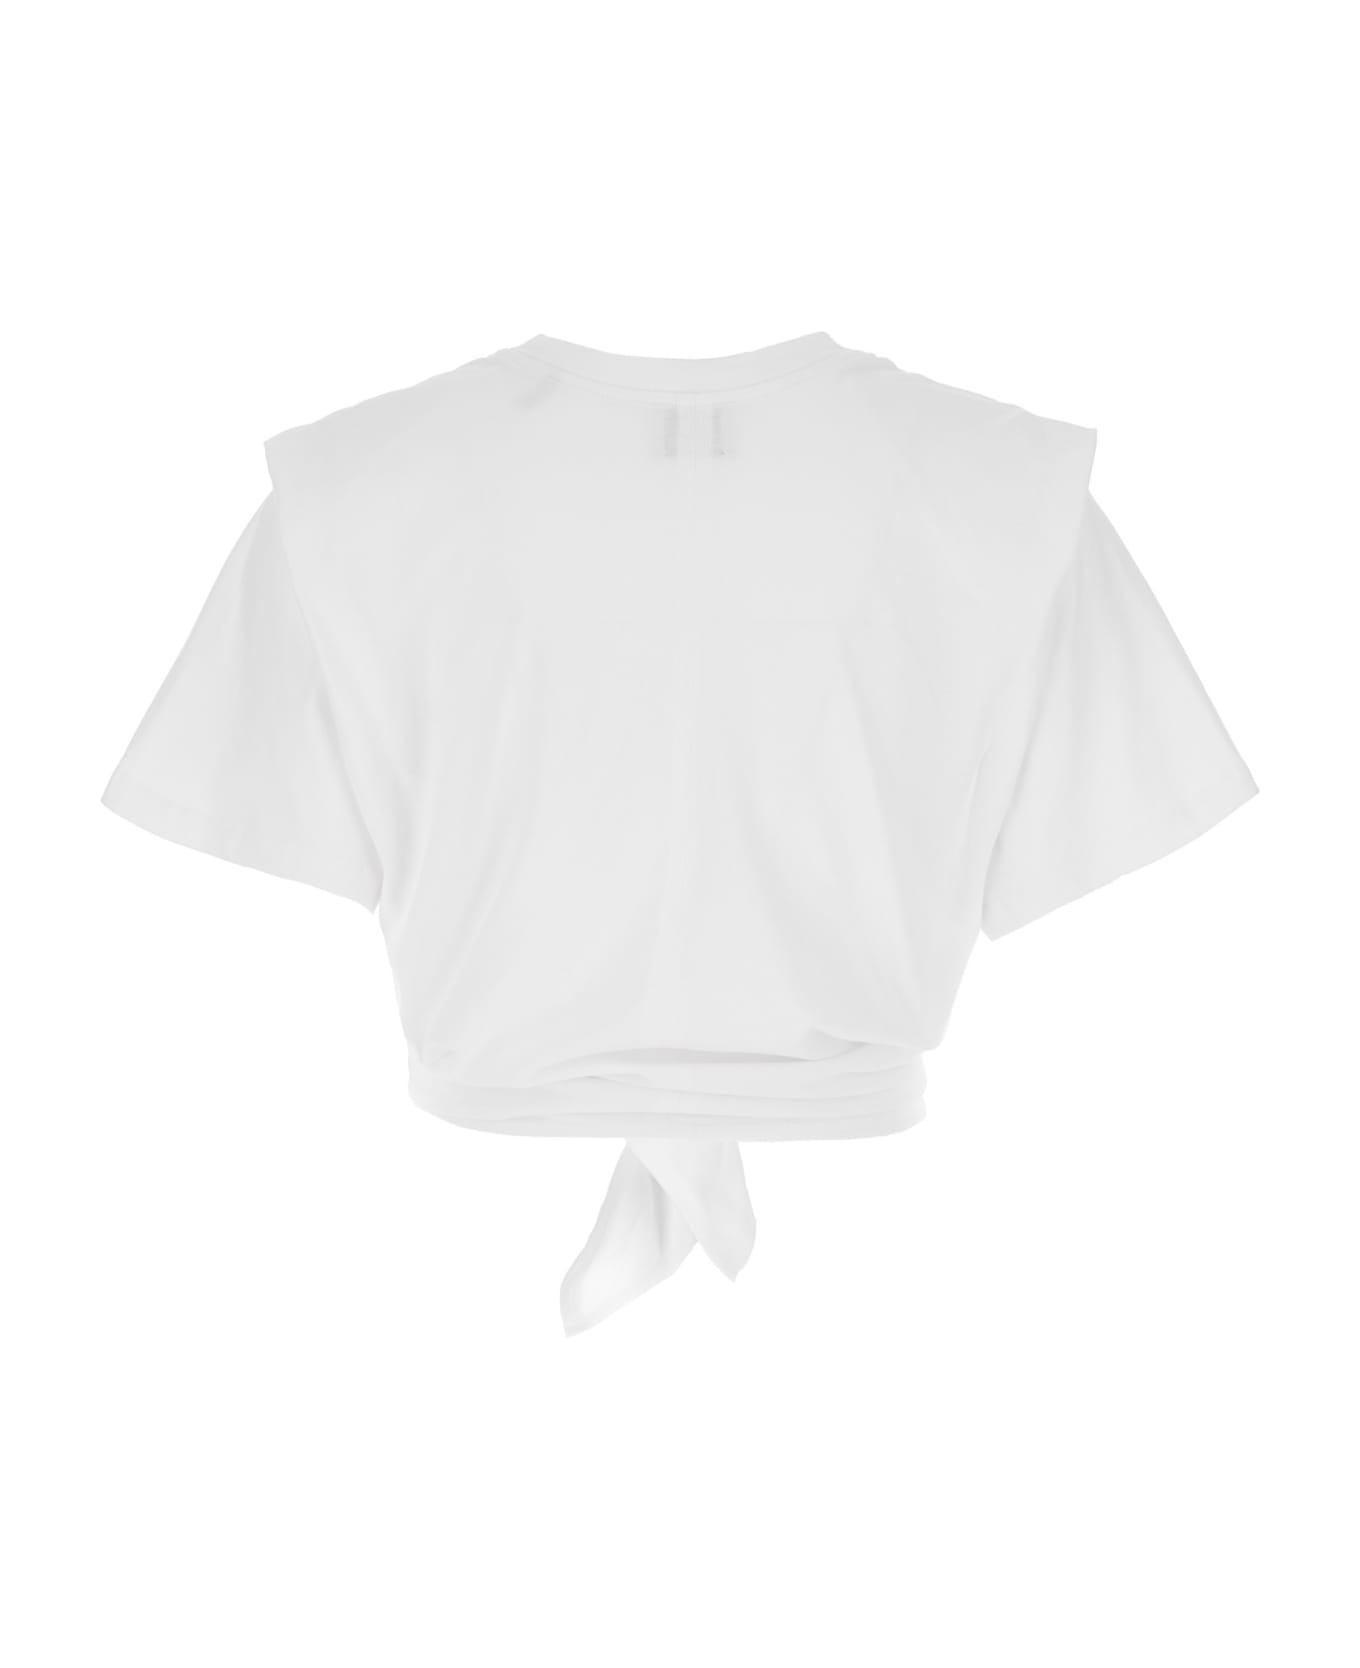 Isabel Marant Zazie T-shirt - White